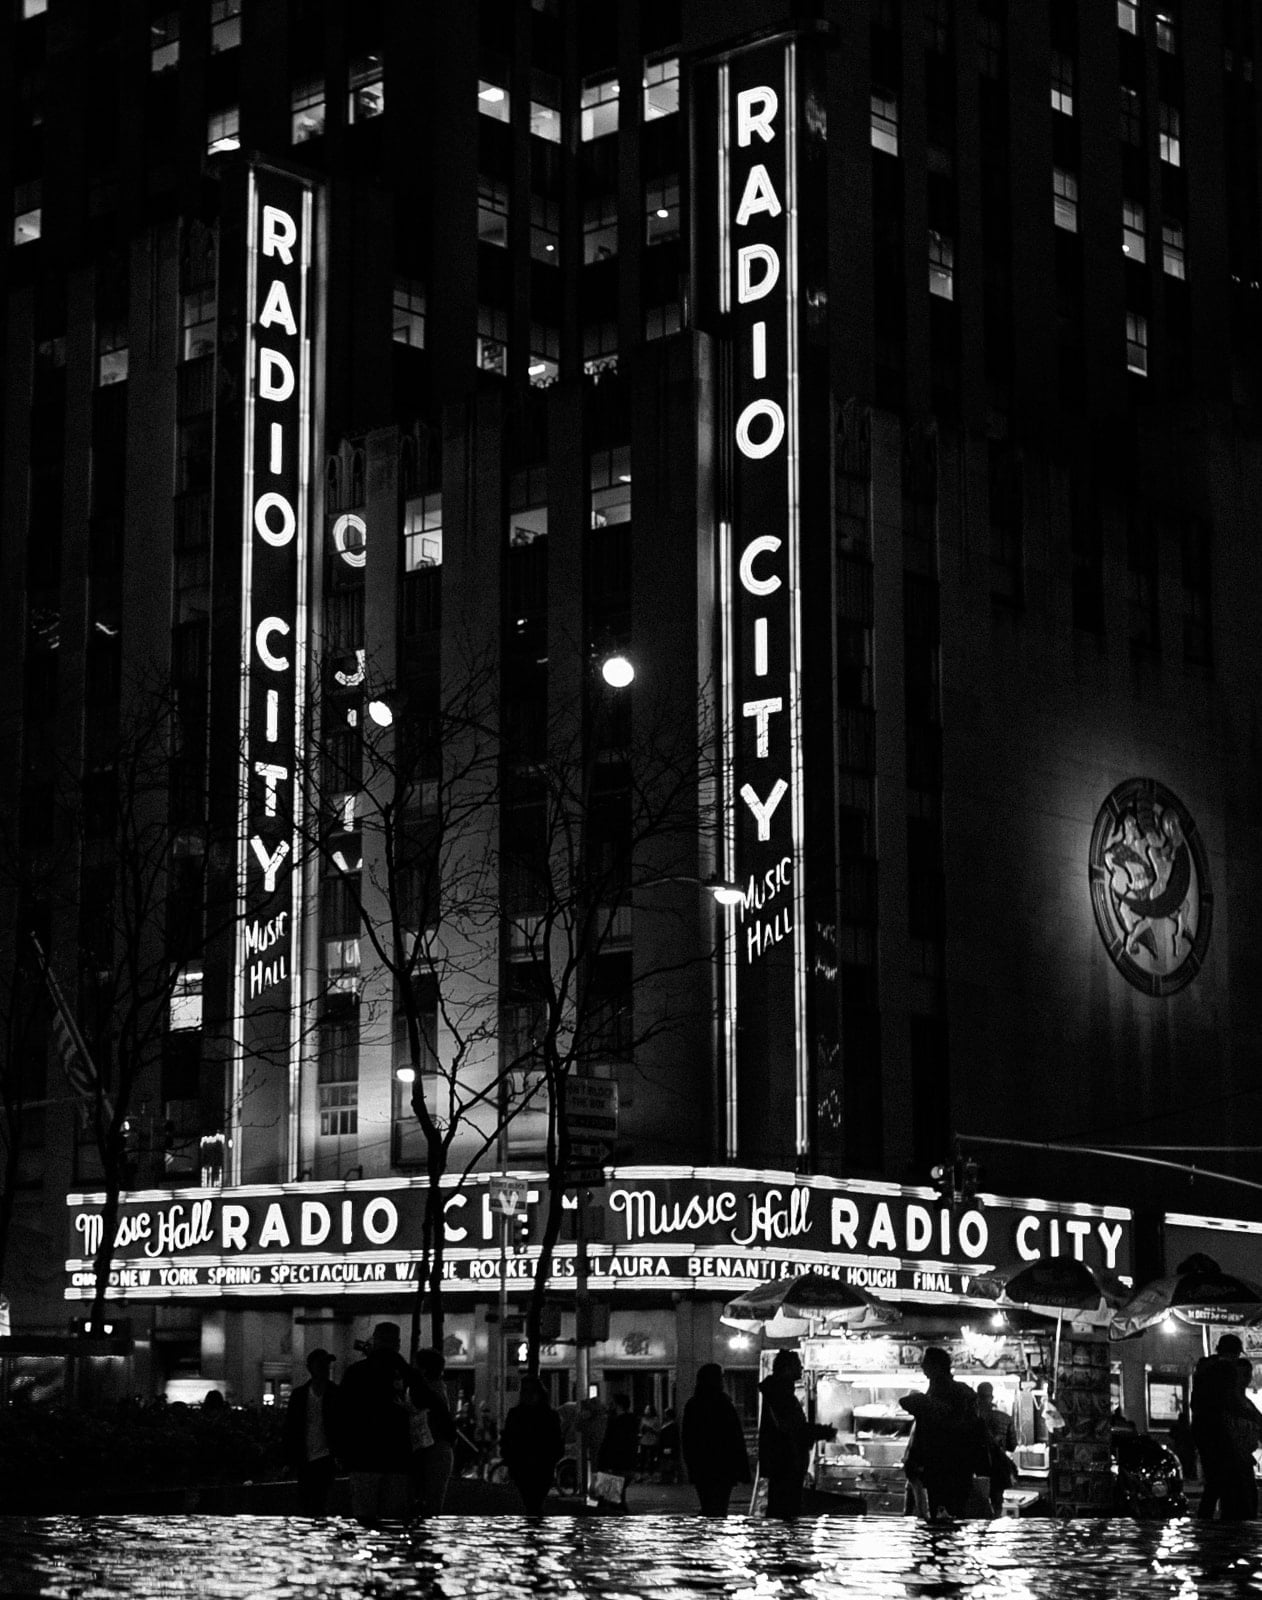 Radio City Music Hall at night in NYC